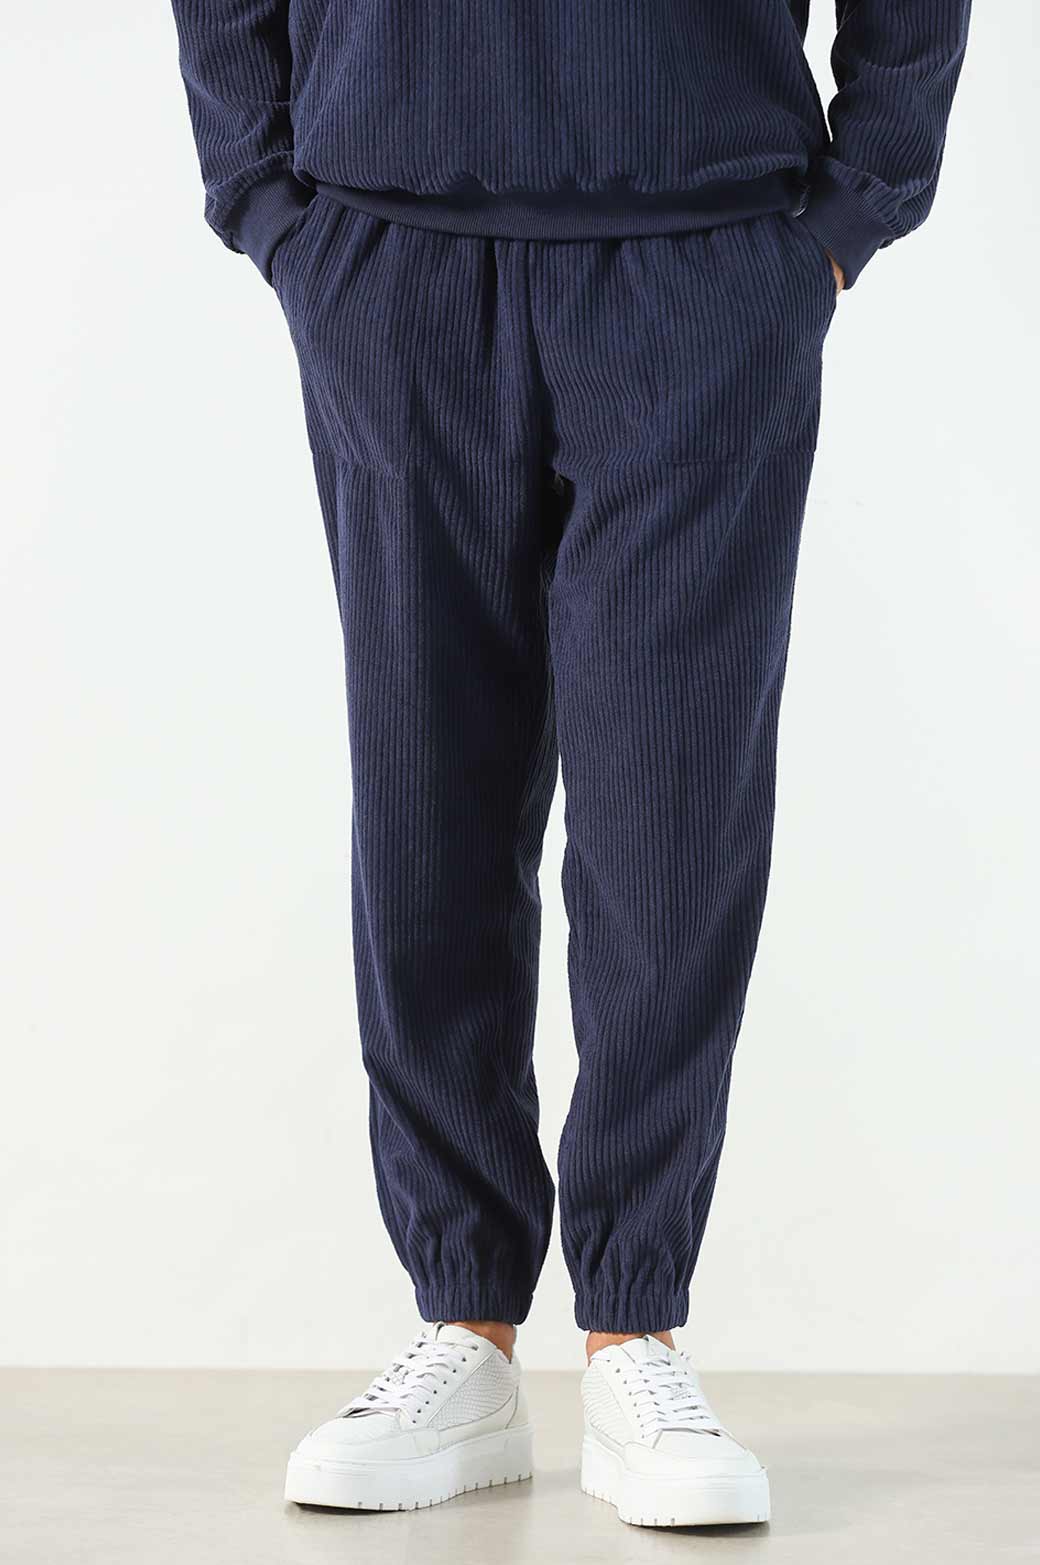 Black Blazer Dark Gray Shirt Blue Gray Striped Tie Black Suit Pants Black  Shoes - Men's Fashion For Less